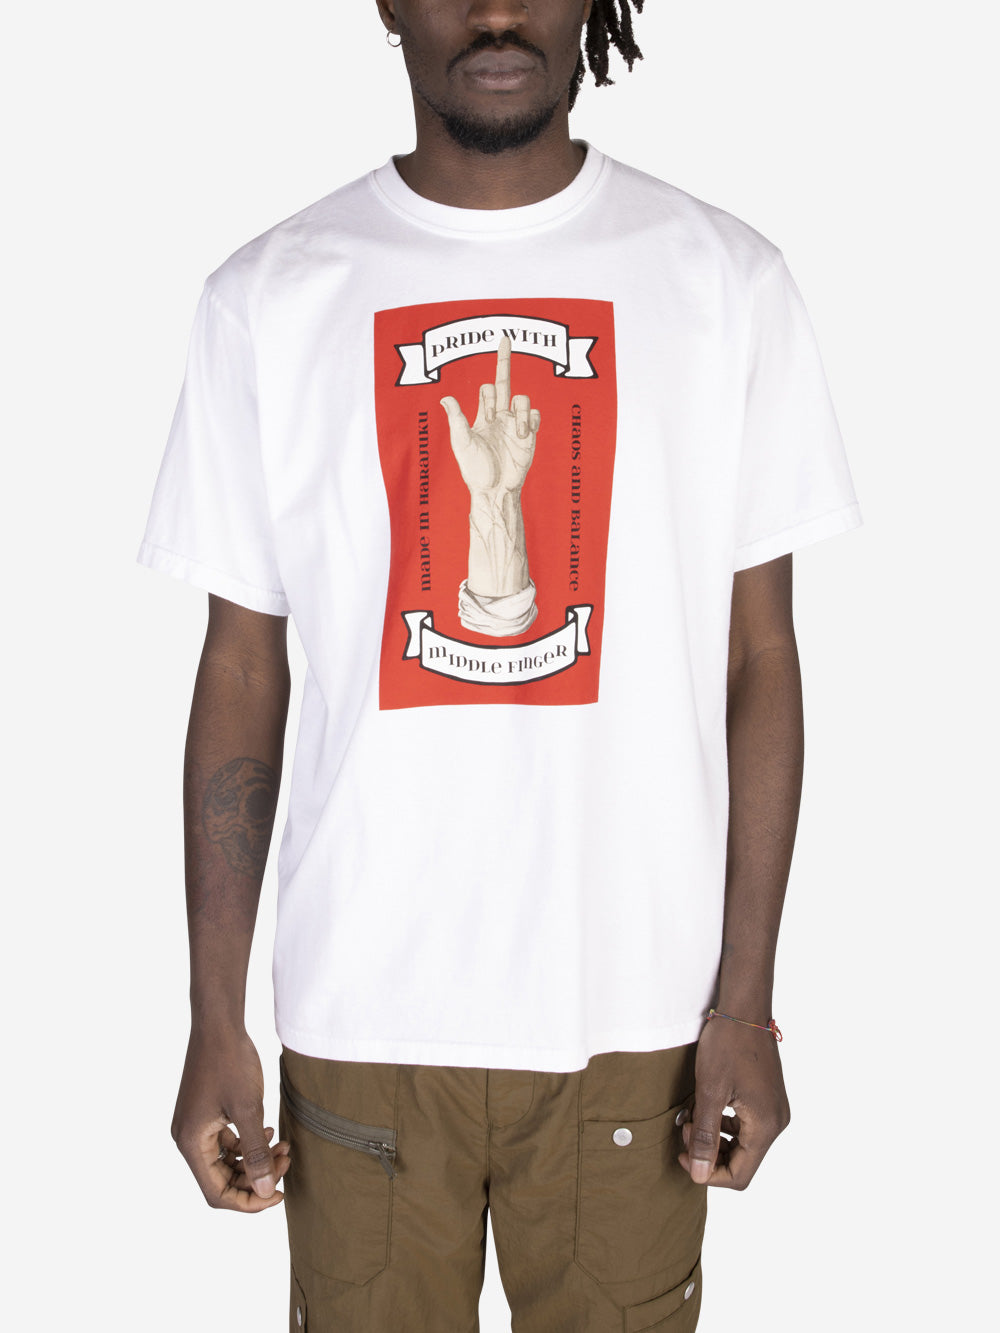 UNDERCOVER T-shirt 'Middle Finger' Bianco Urbanstaroma